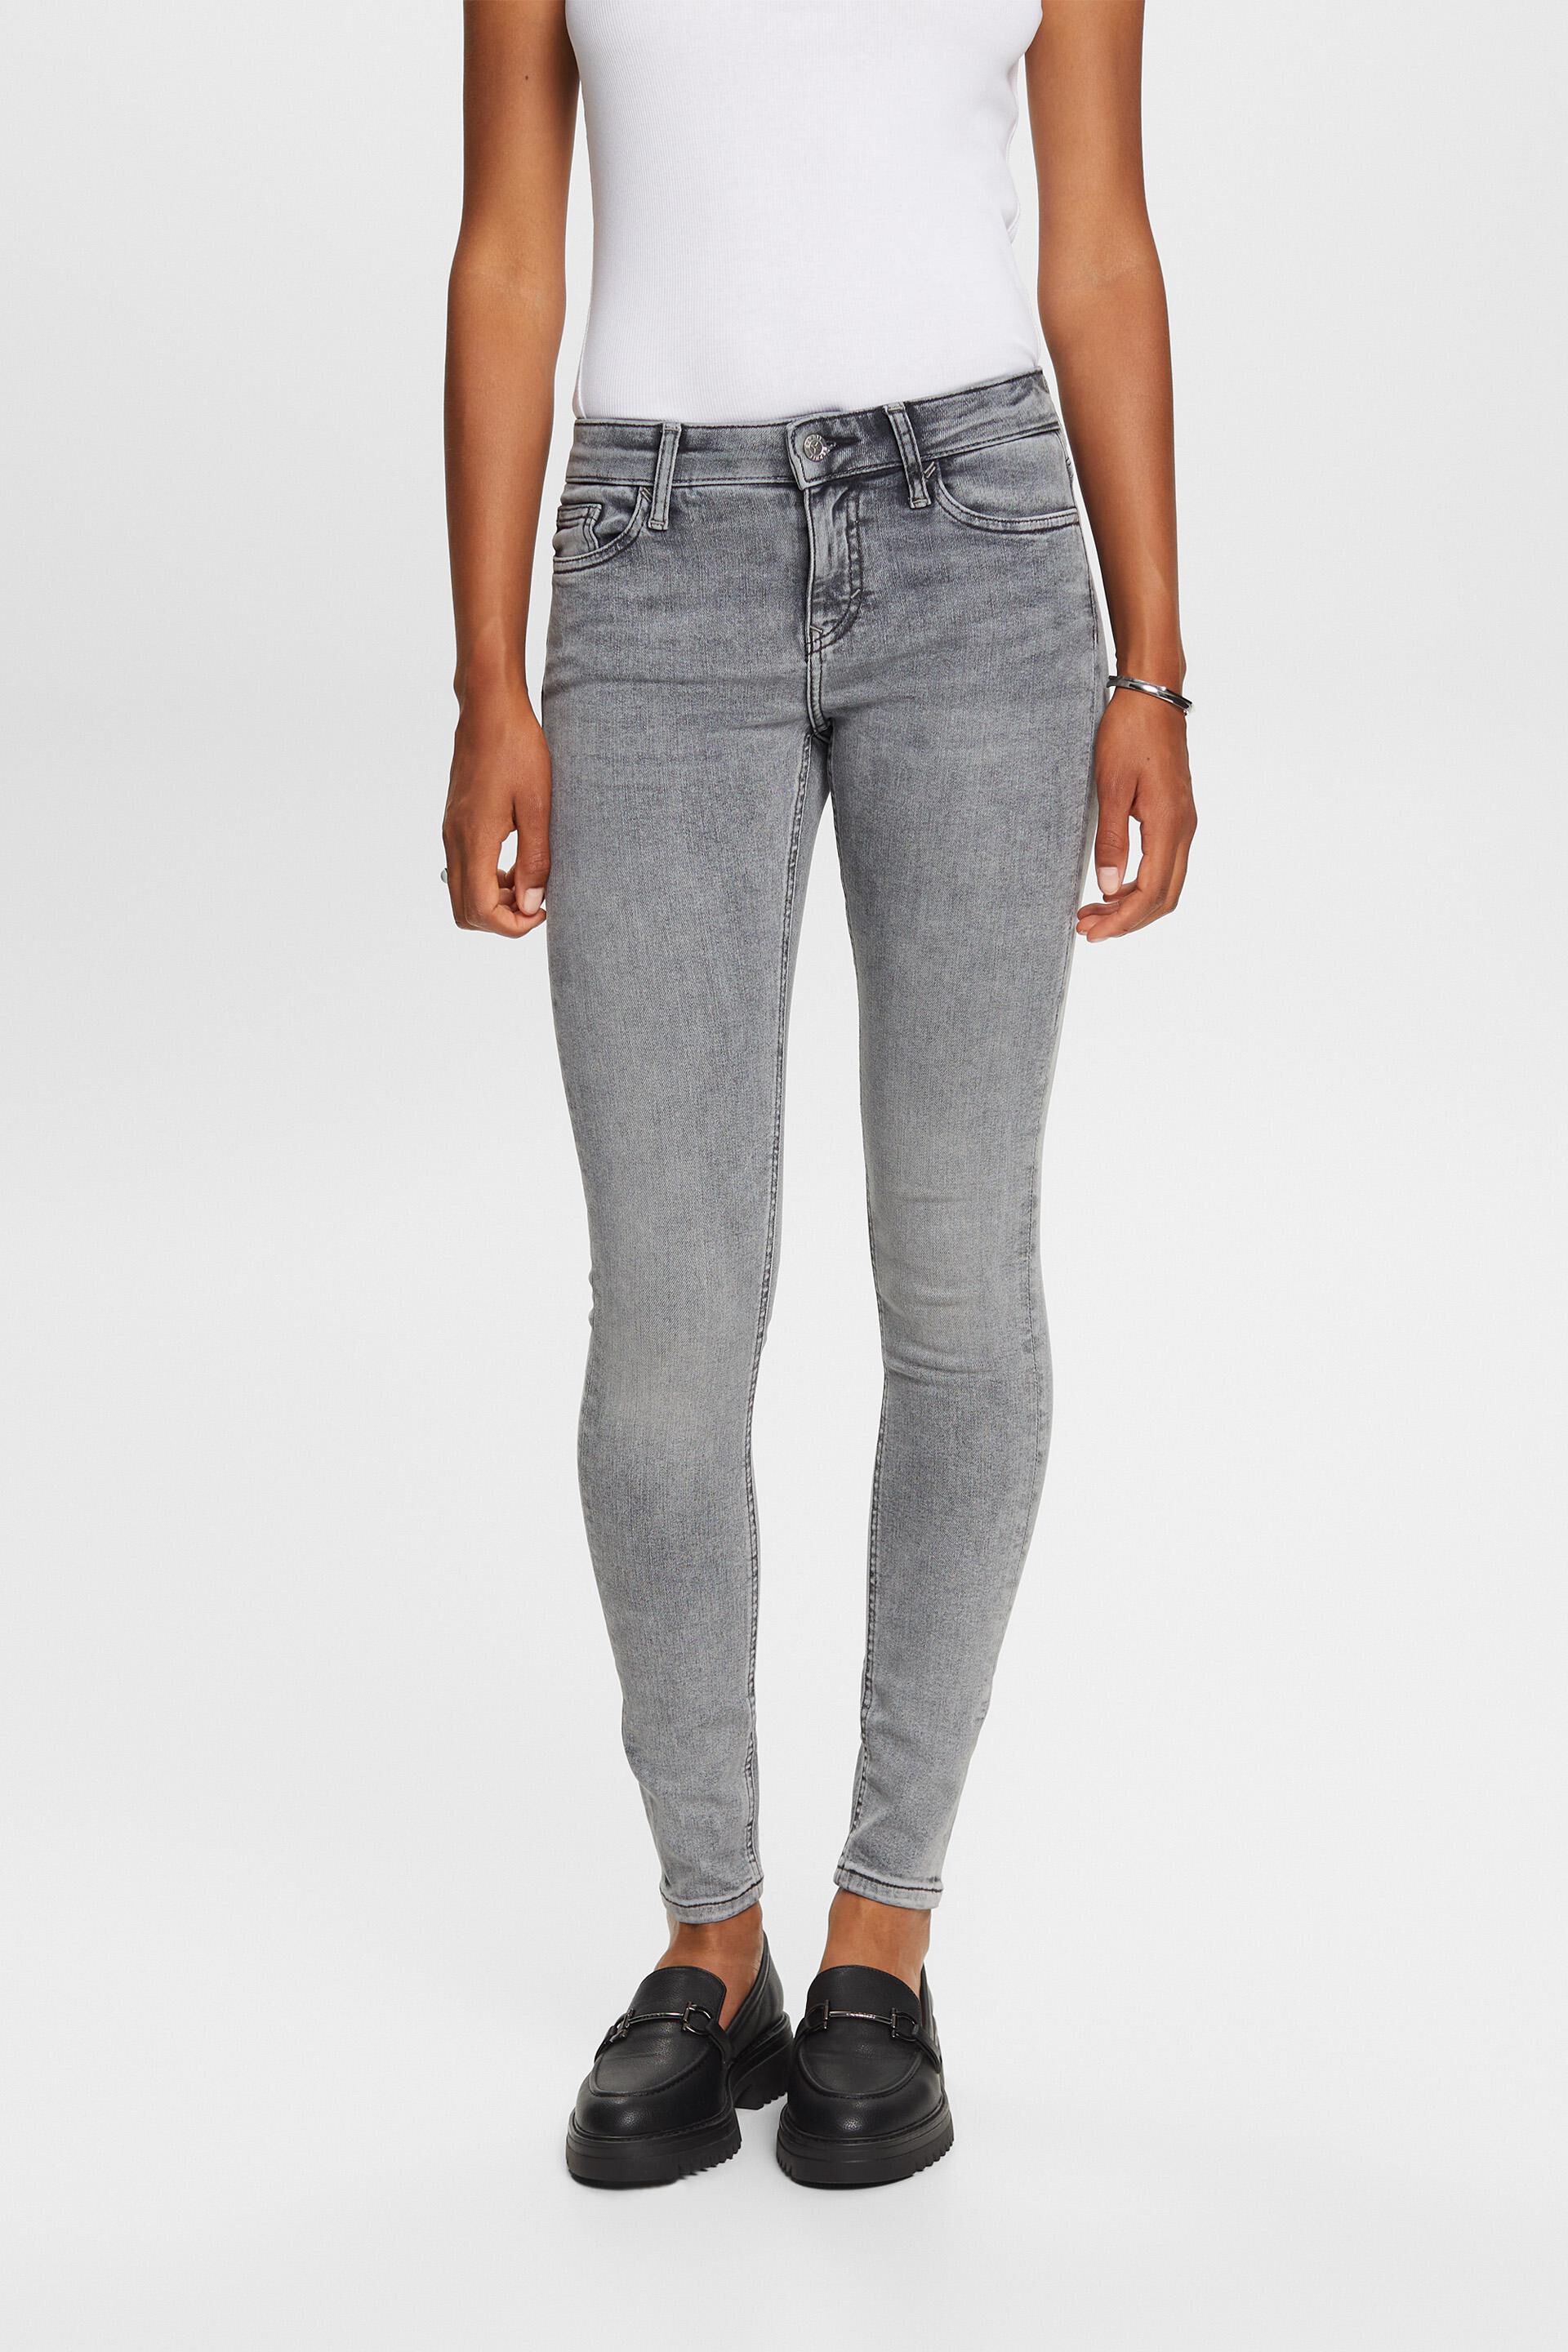 Esprit Mid-Rise Skinny Jeans